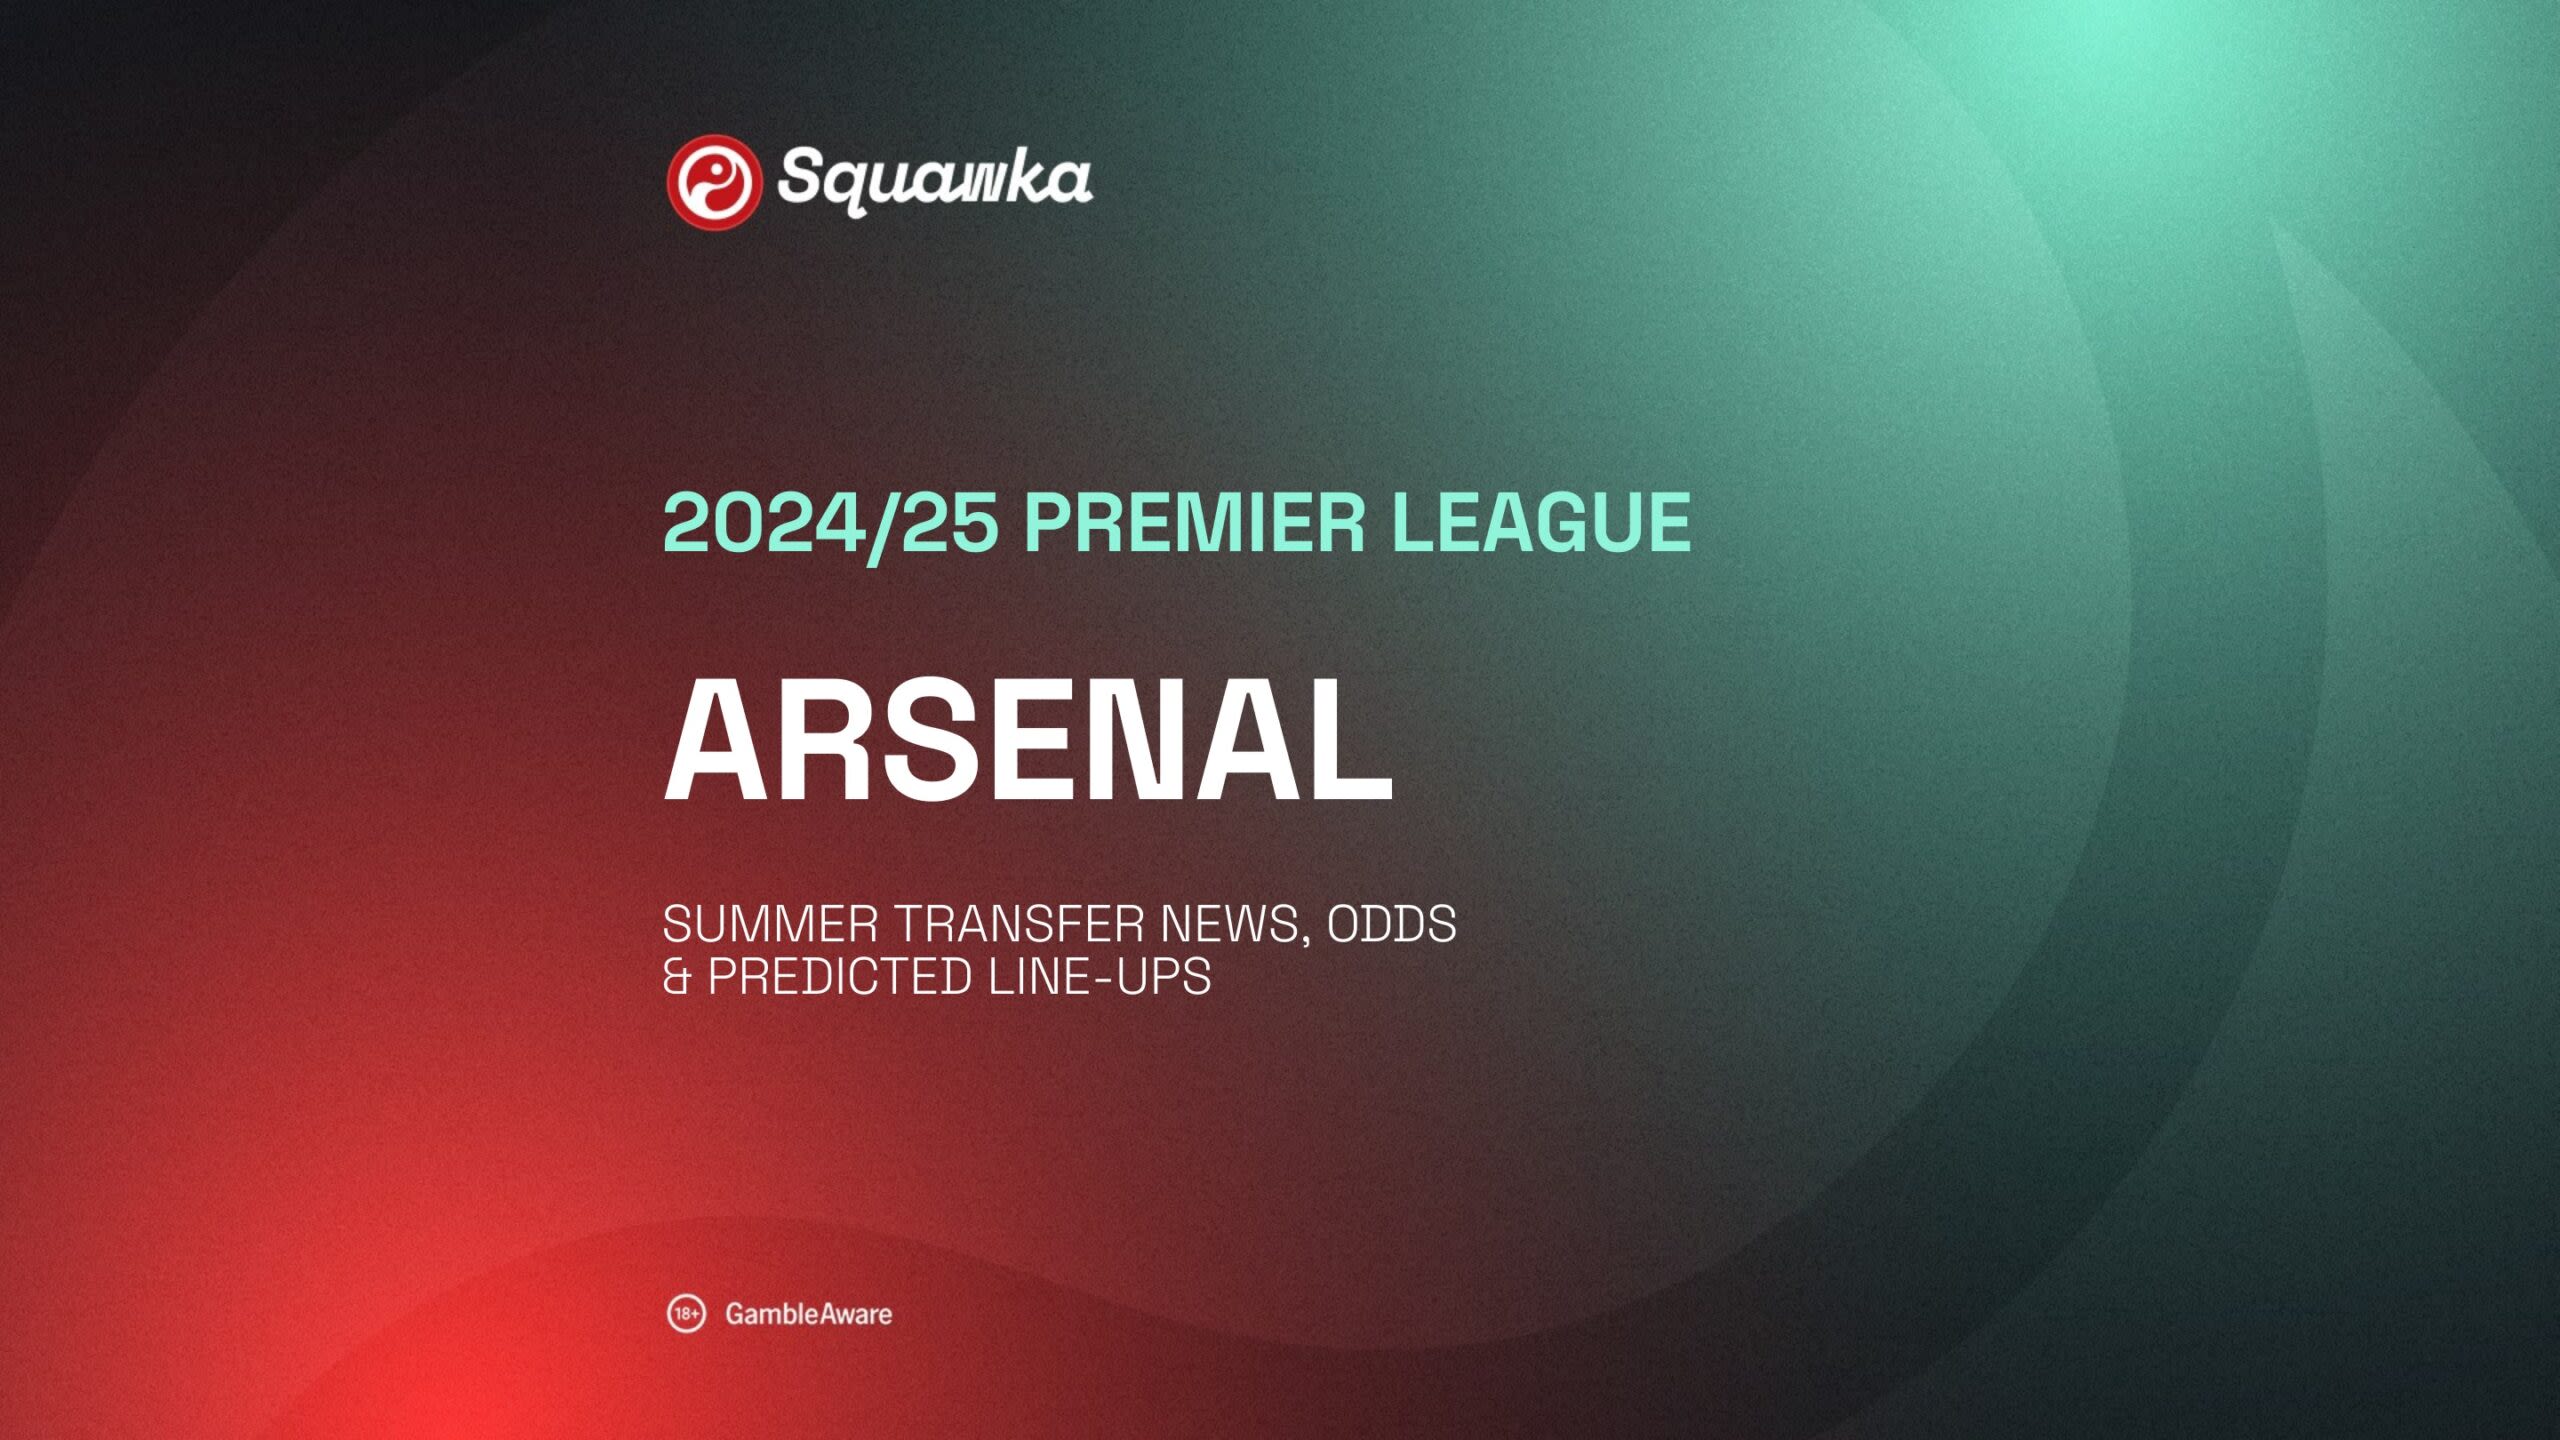 Arsenal summer transfer news, odds & predicted Mikel Arteta starting line-ups